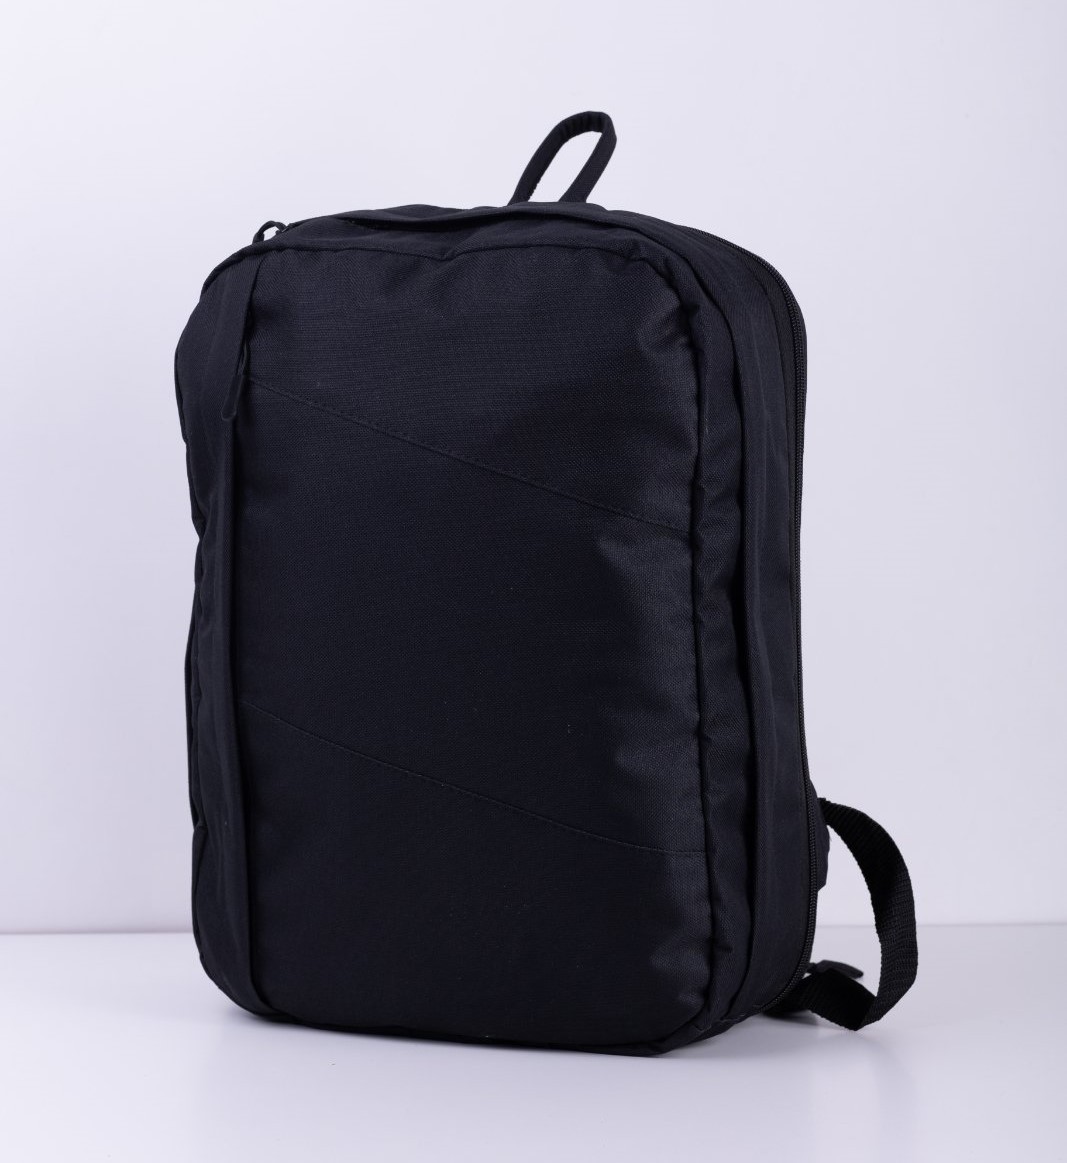 TRVLbag black transformer | hand luggage | backpack 40x30x10 - 40x30x20